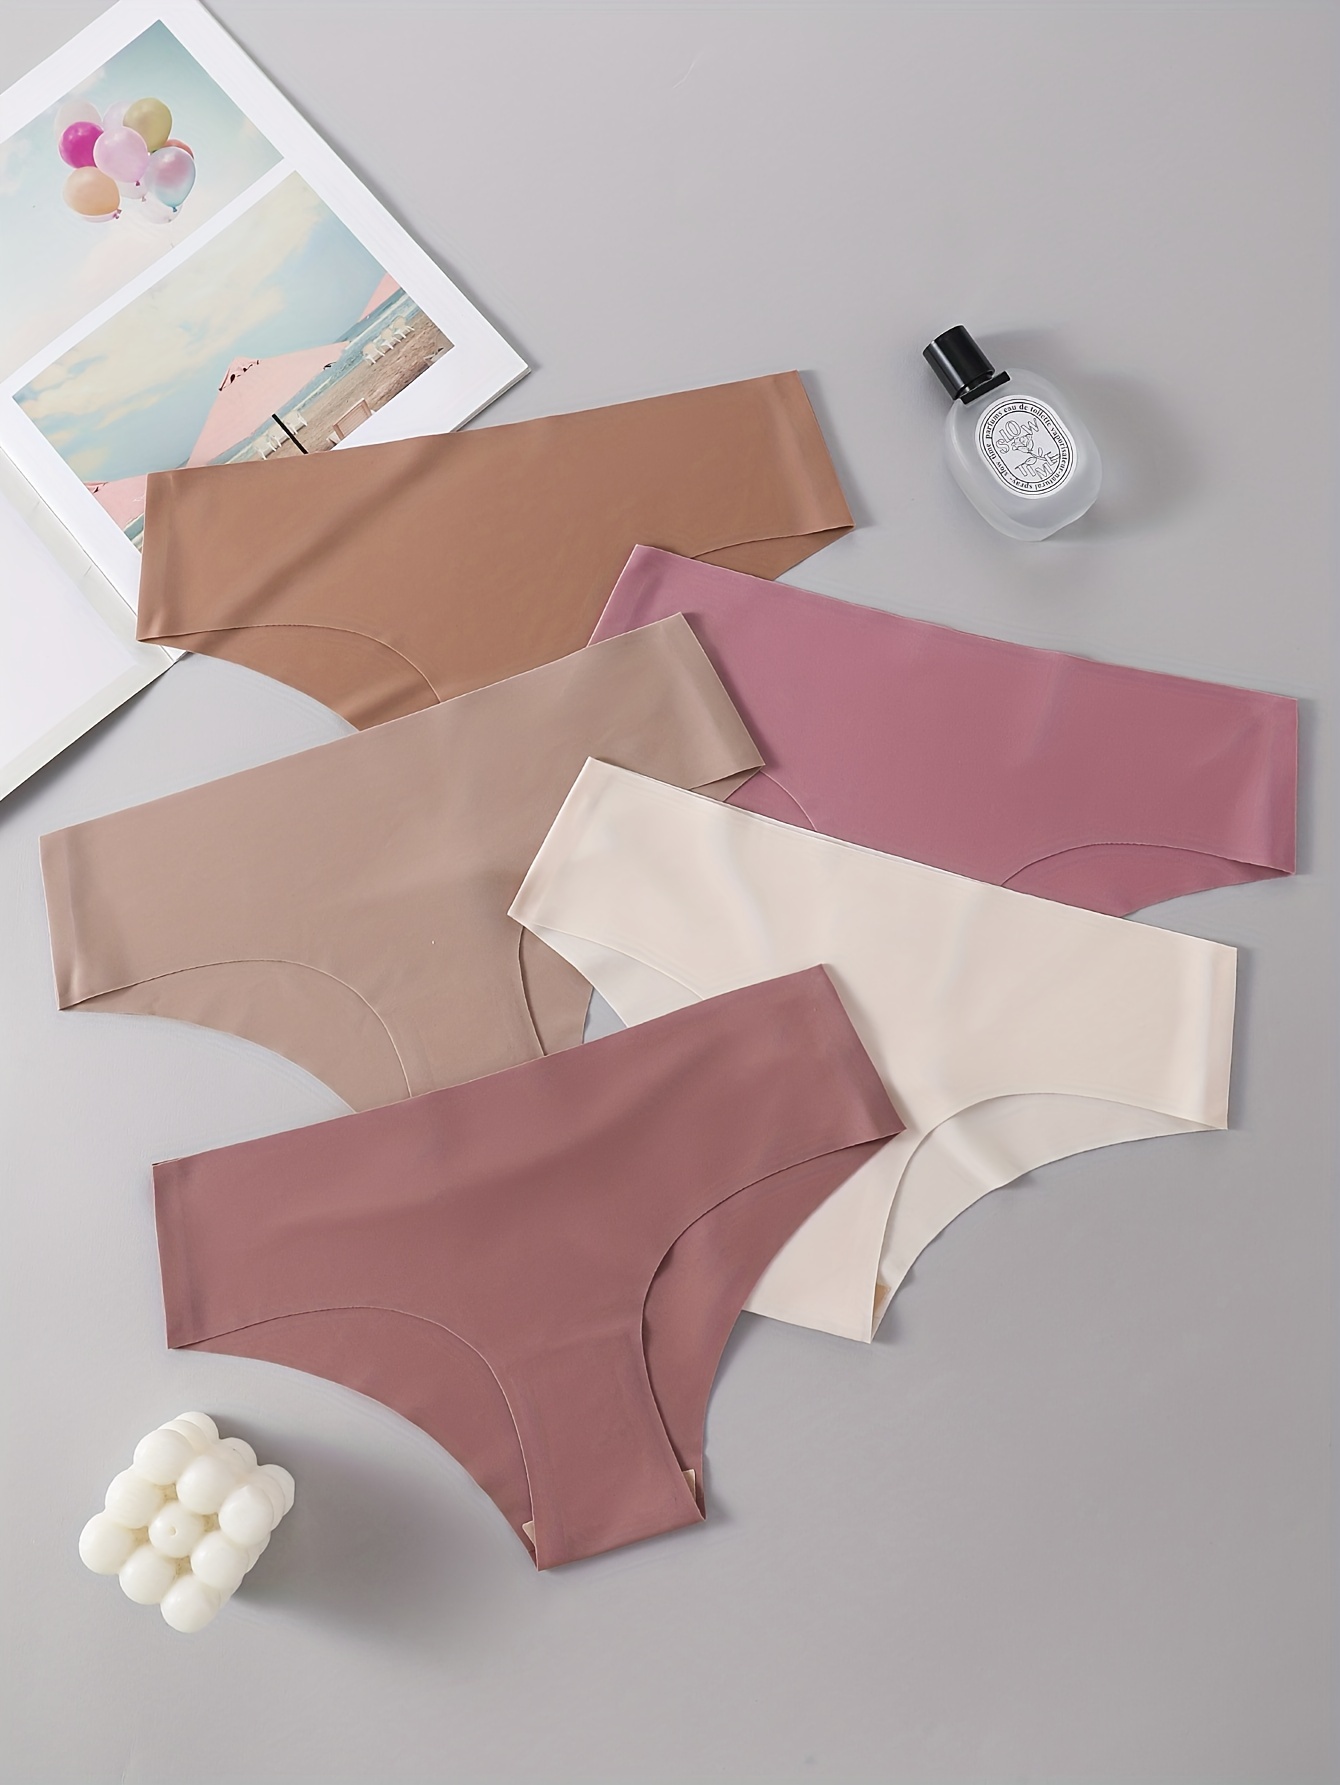 Women's Underwear & Panties, Seamless Underwear